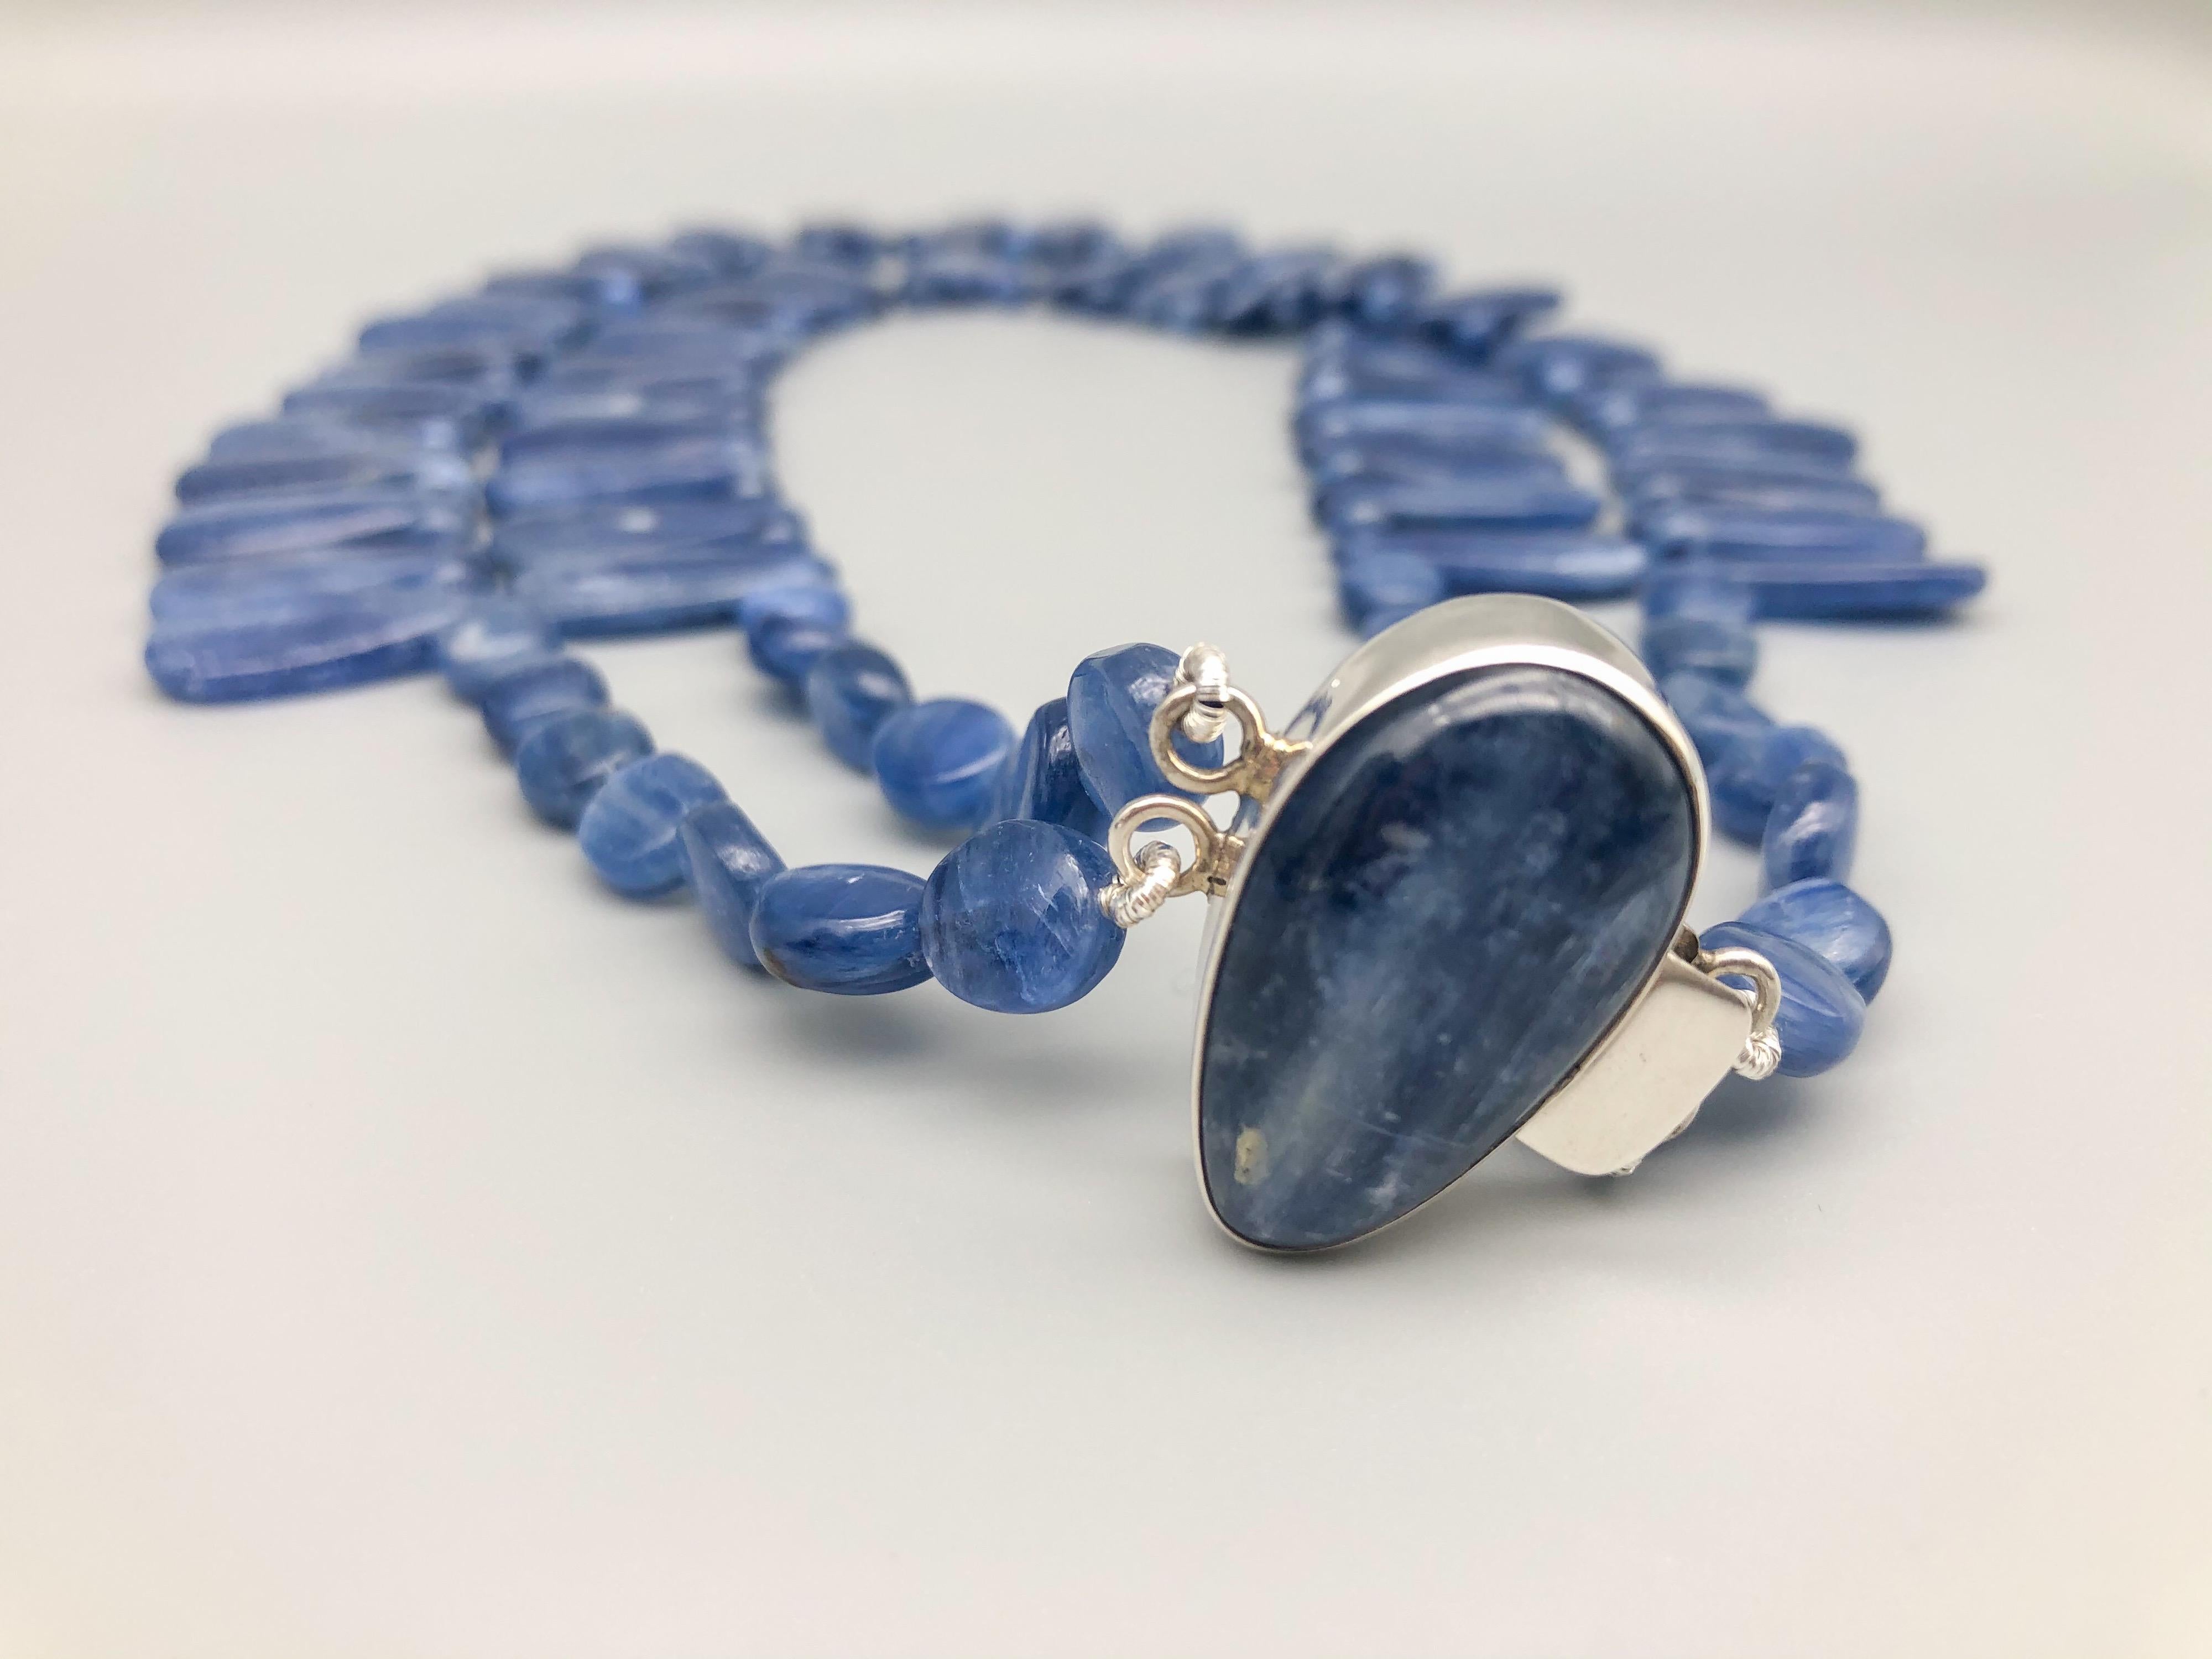 Mixed Cut A.Jeschel A True Blue Kyanite 2 Strand Necklace. For Sale